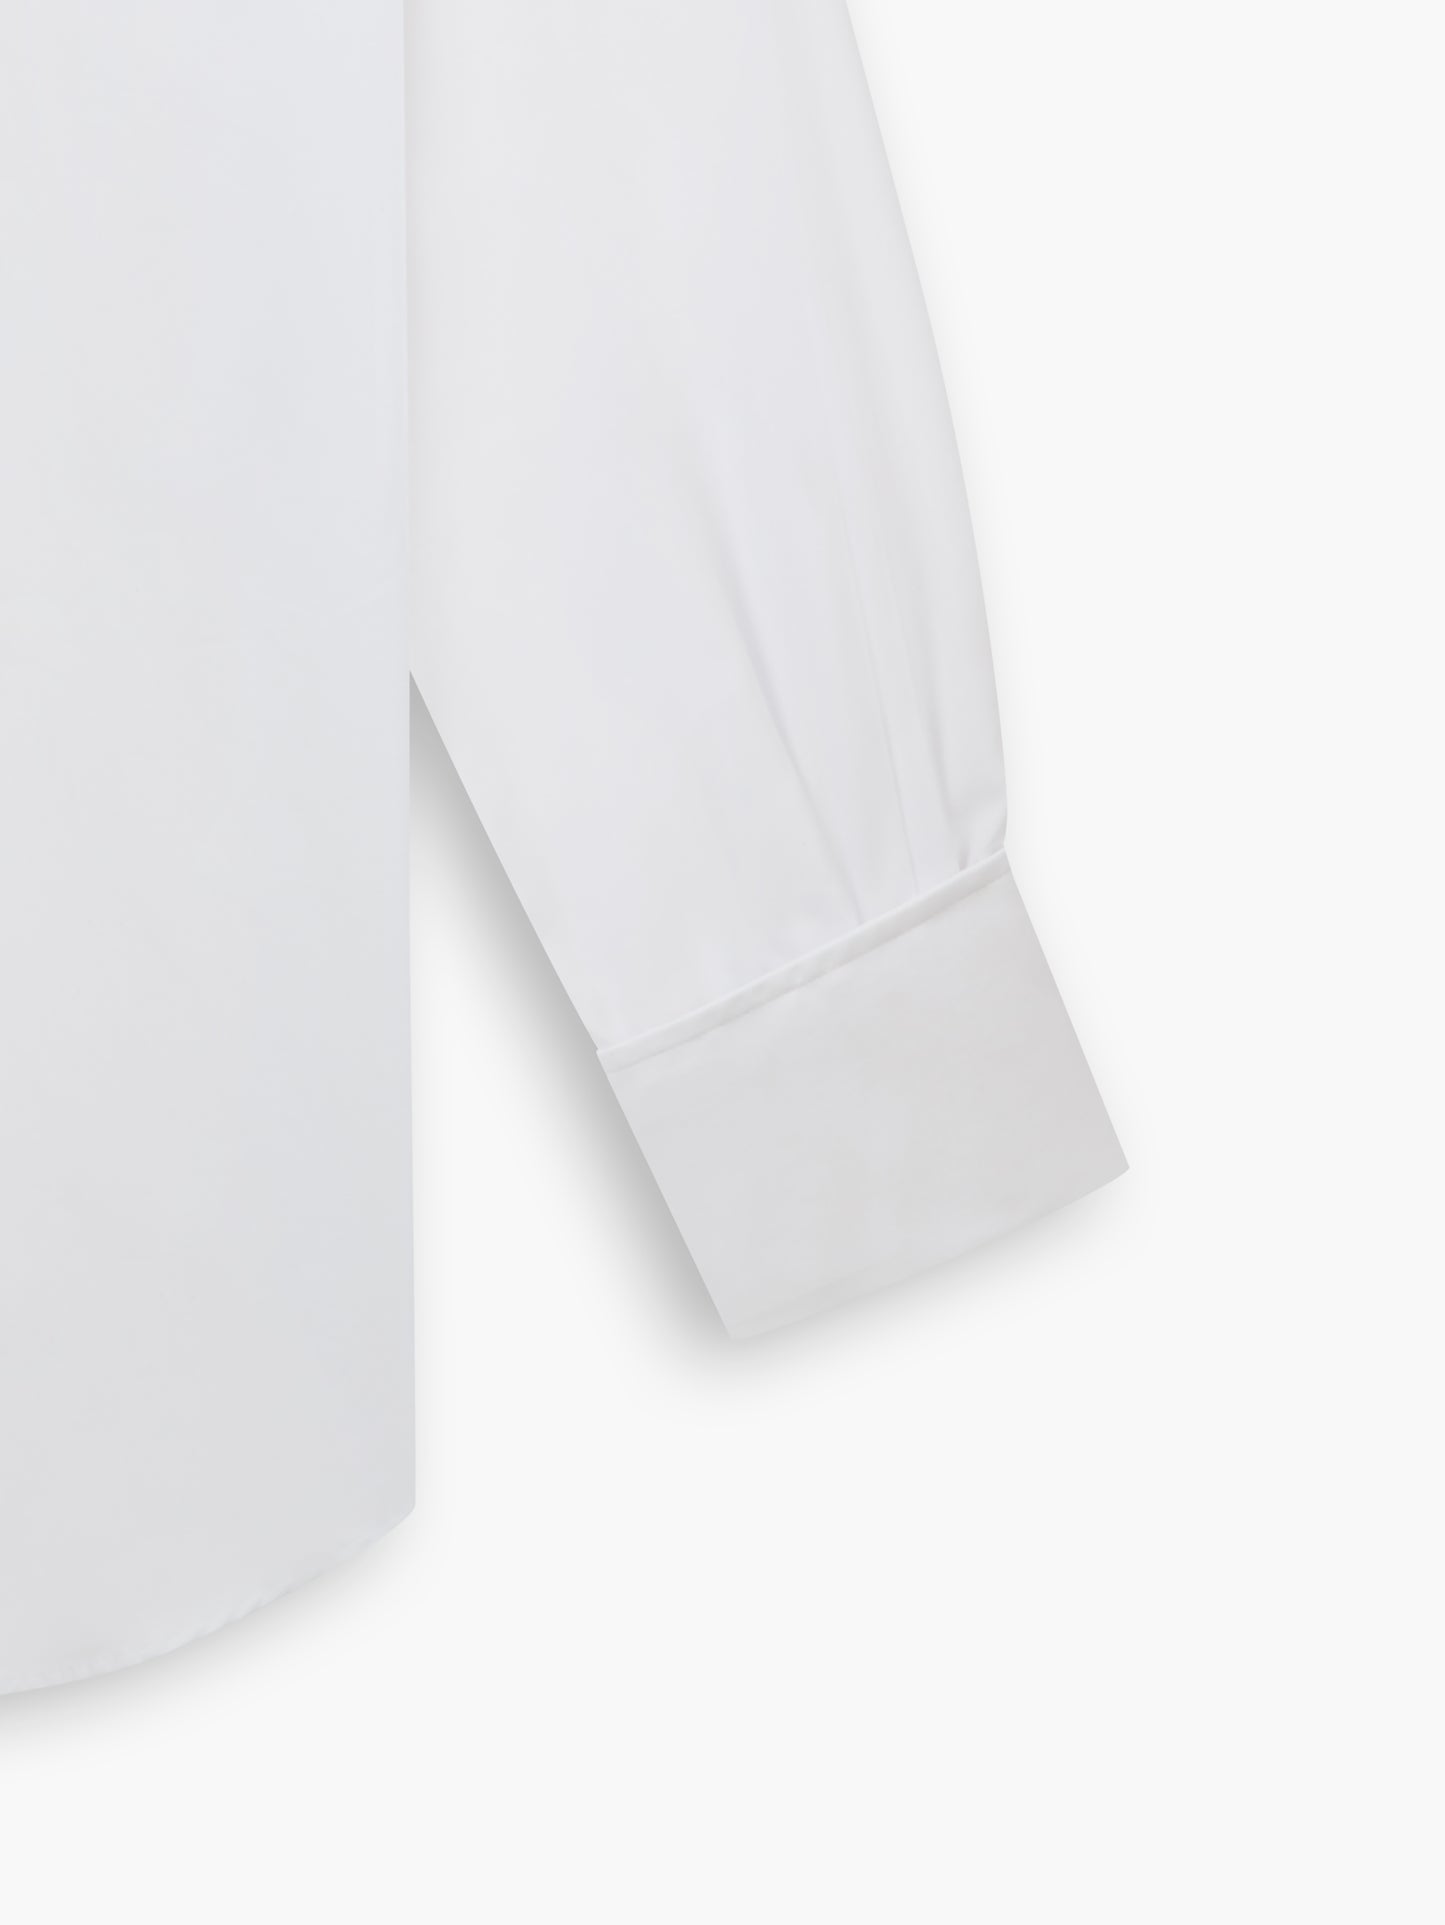 White Poplin Slim Fit Double Cuff Cutaway Collar Shirt